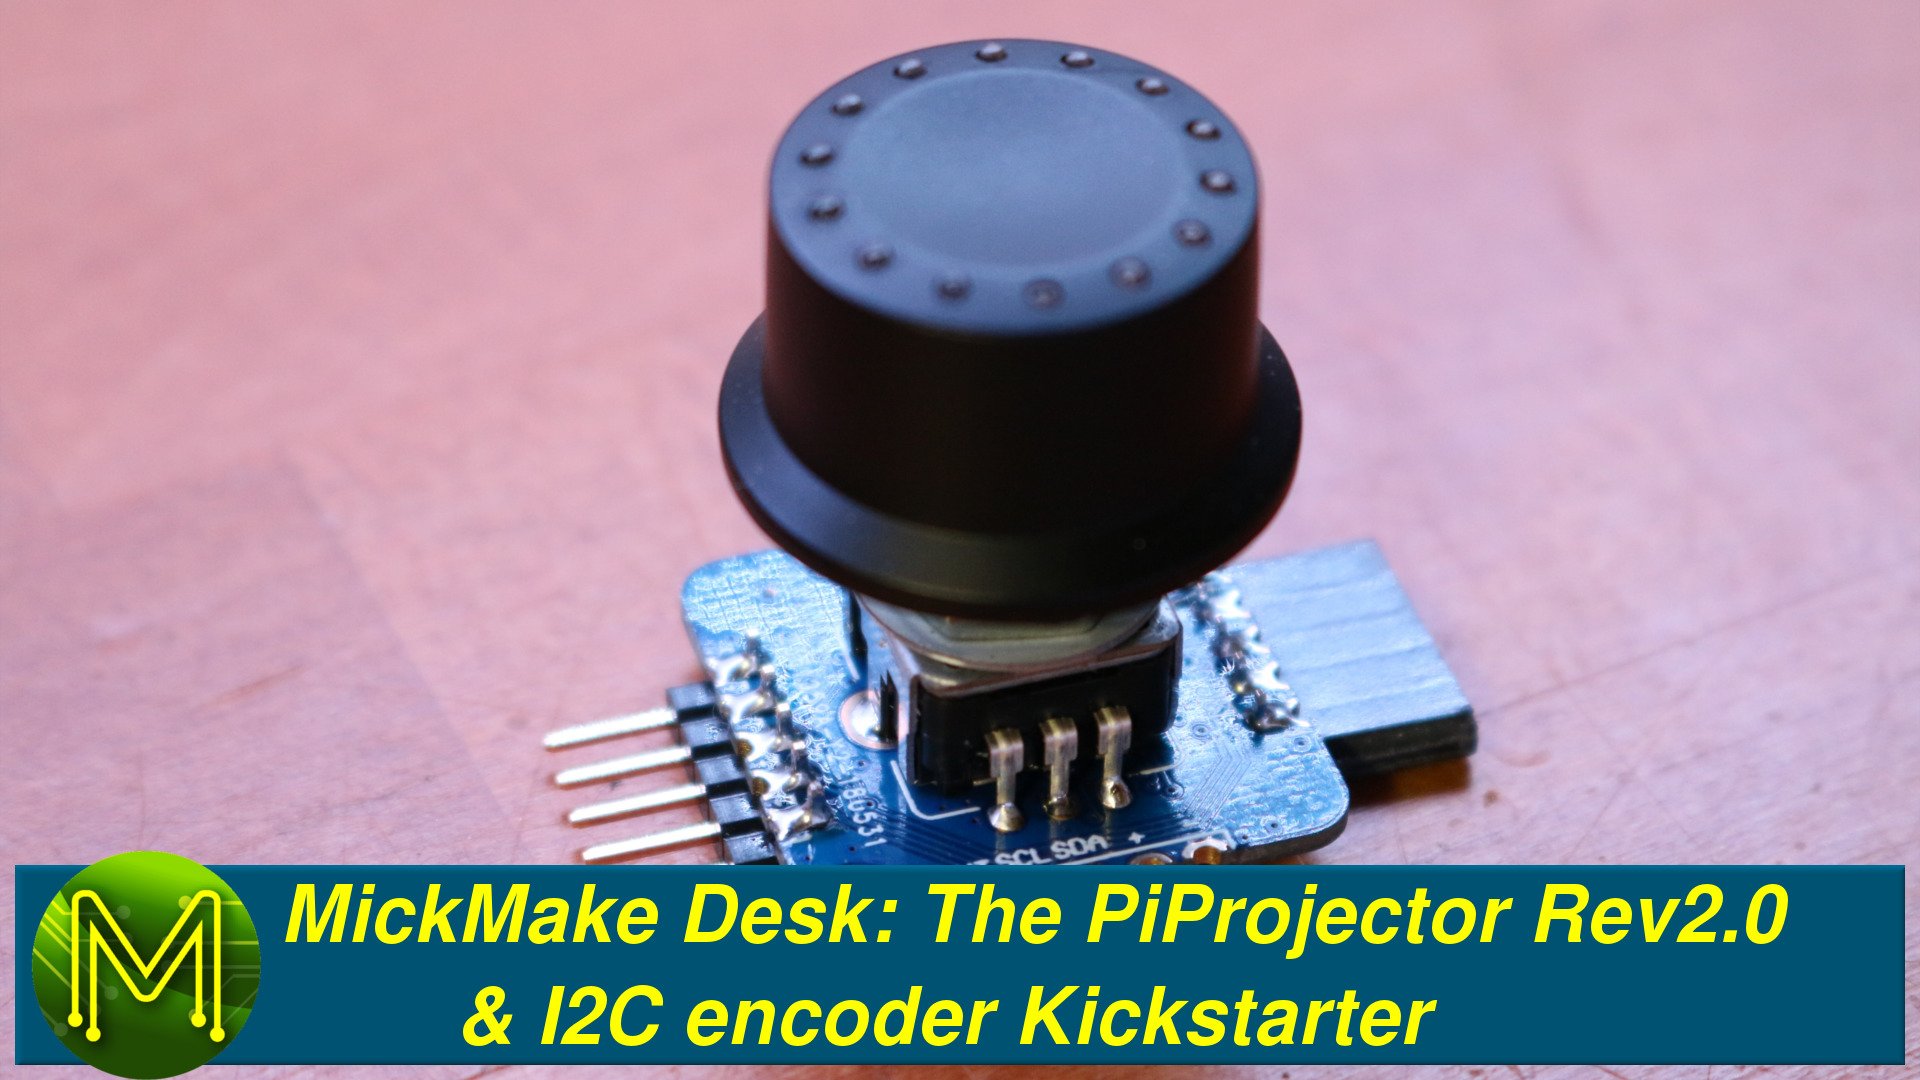 The PiProjector Rev2.0 & I2C encoder Kickstarter - MickMake Desk